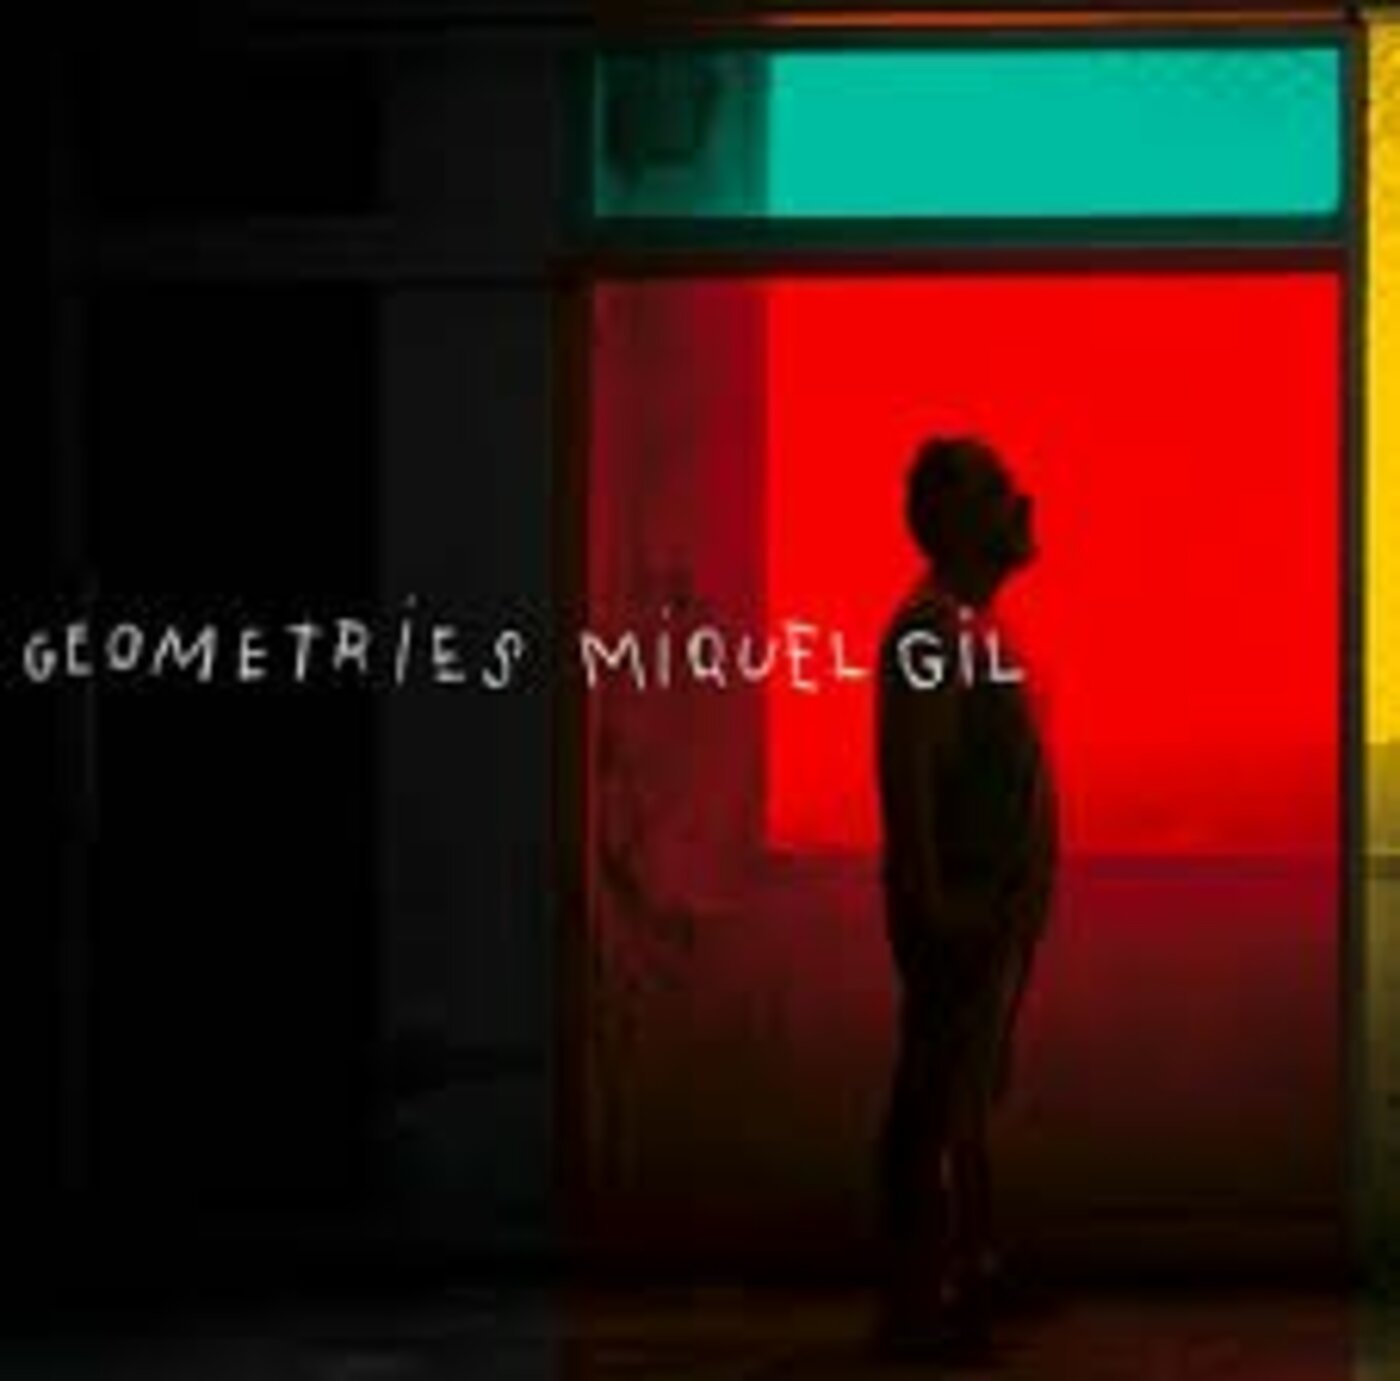 Miquel Gil - Geometries | musica en valencià